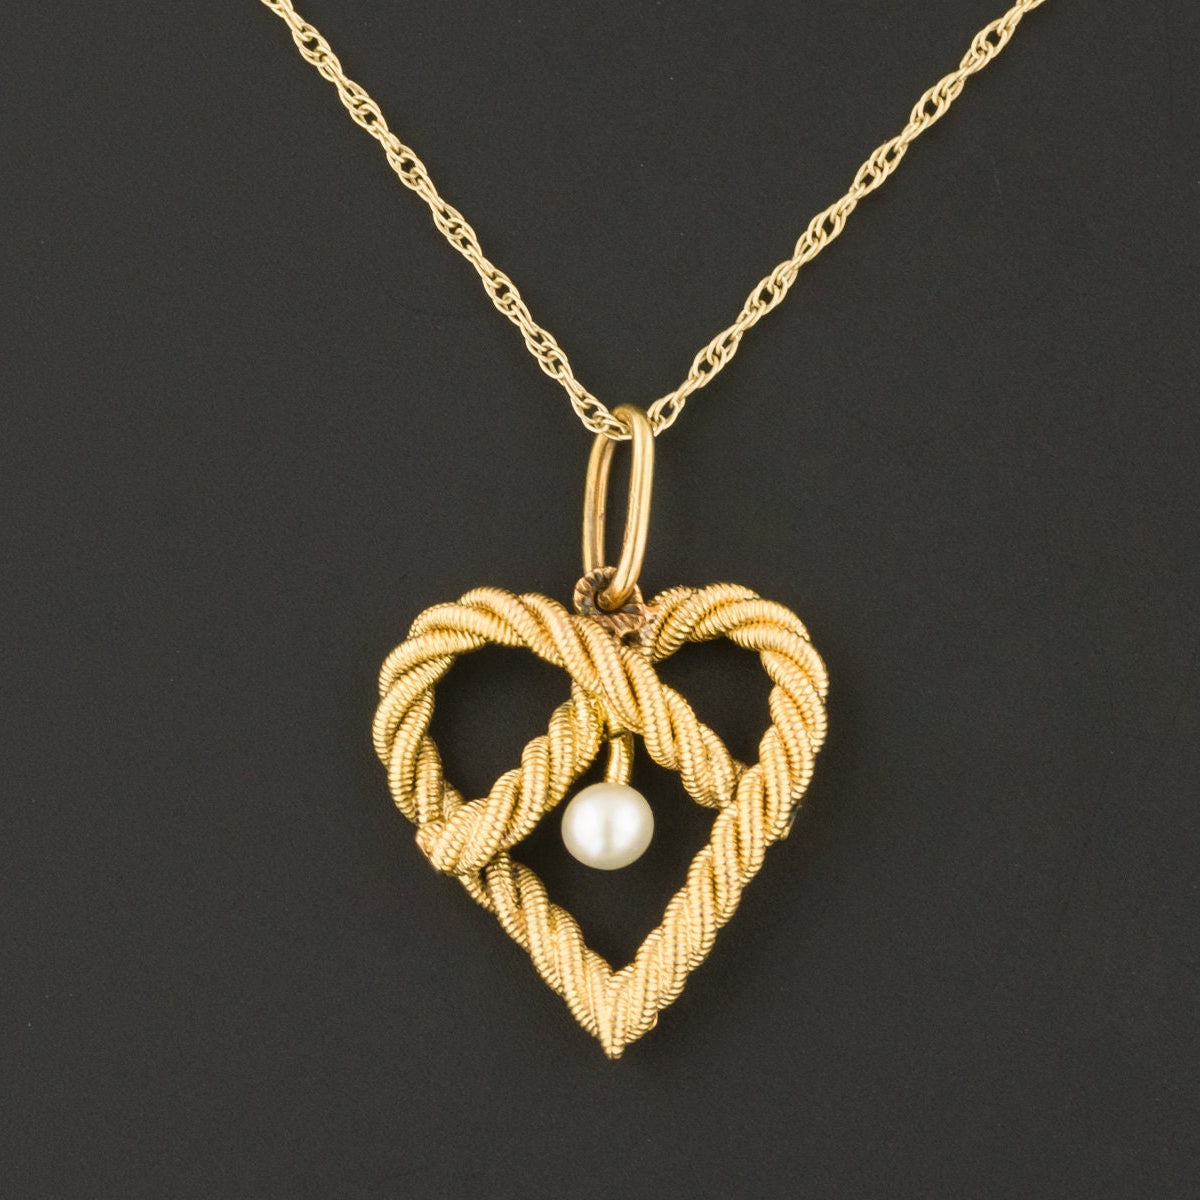 Antique Gold Love Knot Pendant | 15ct Gold Heart Pendant on Optional 10k Chain 